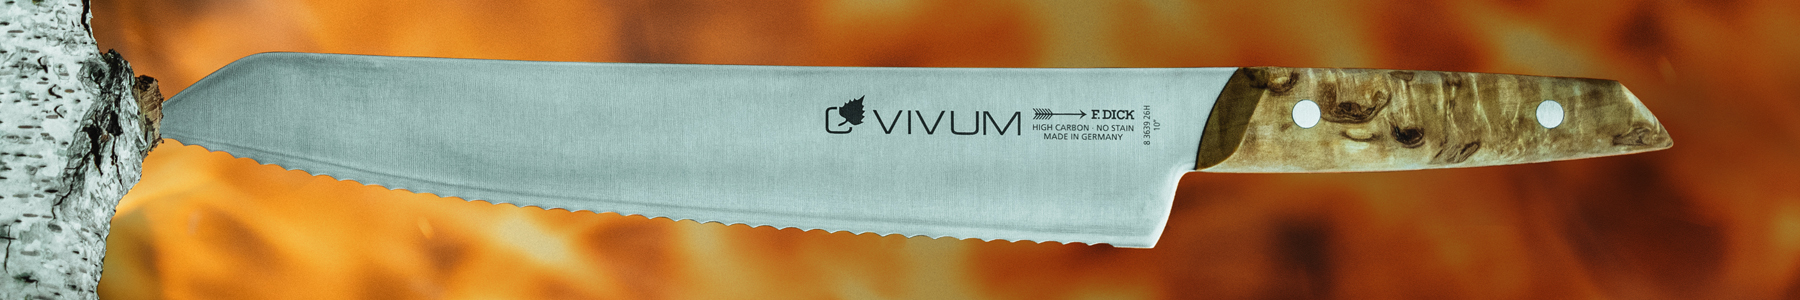 FDick vivum series bread knife